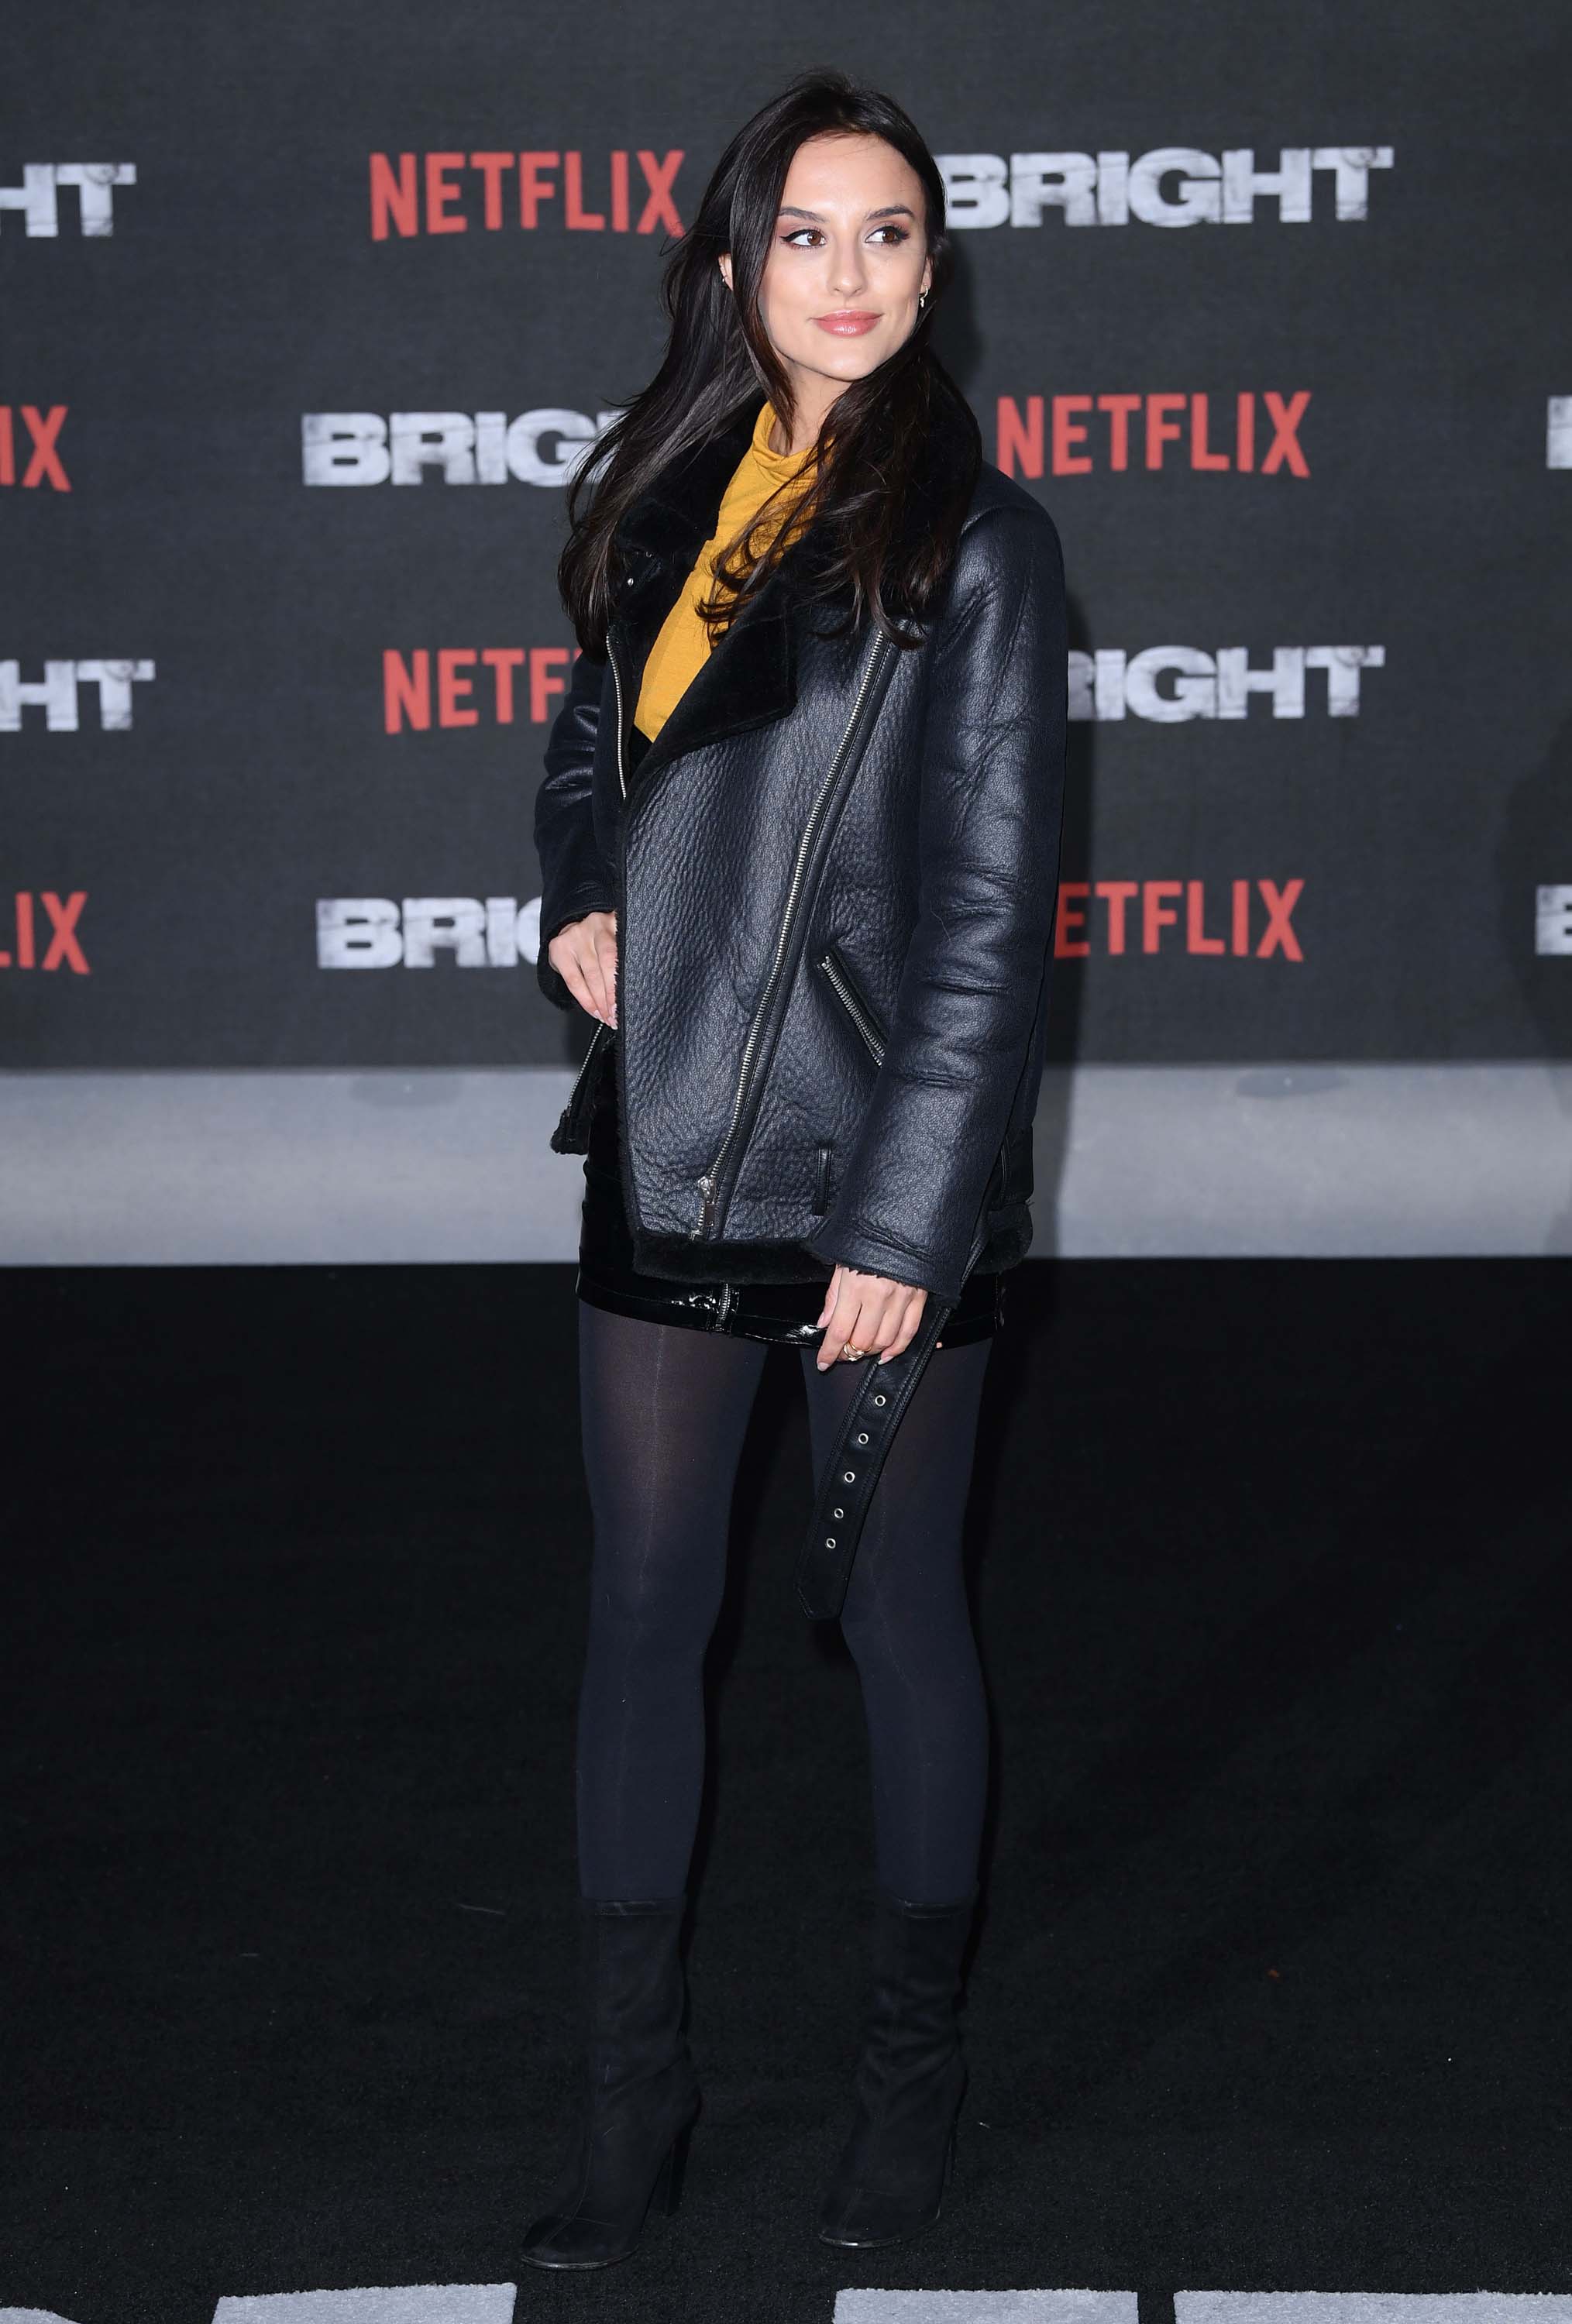 Lucy Watson attends Bright film premiere